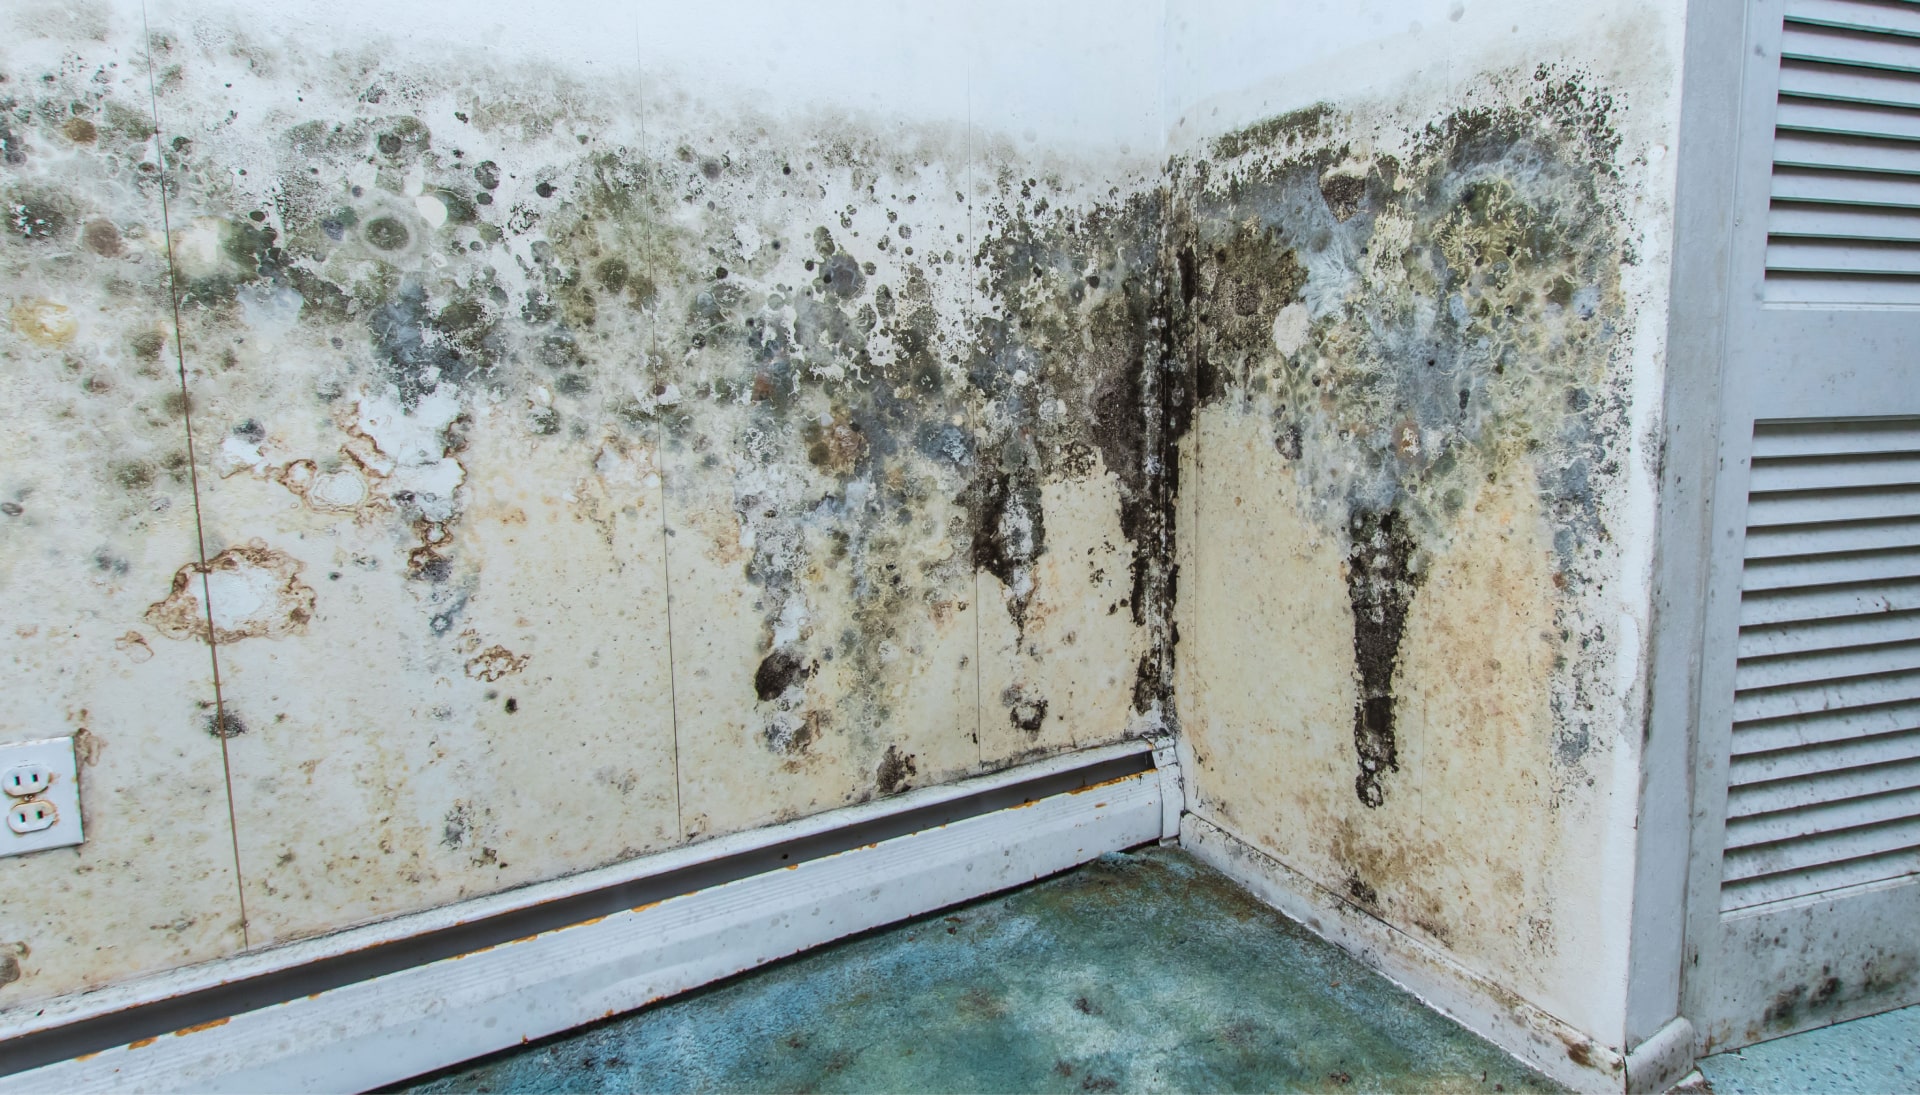 Professional mold removal, odor control, and water damage restoration service in Castle Rock, Colorado.